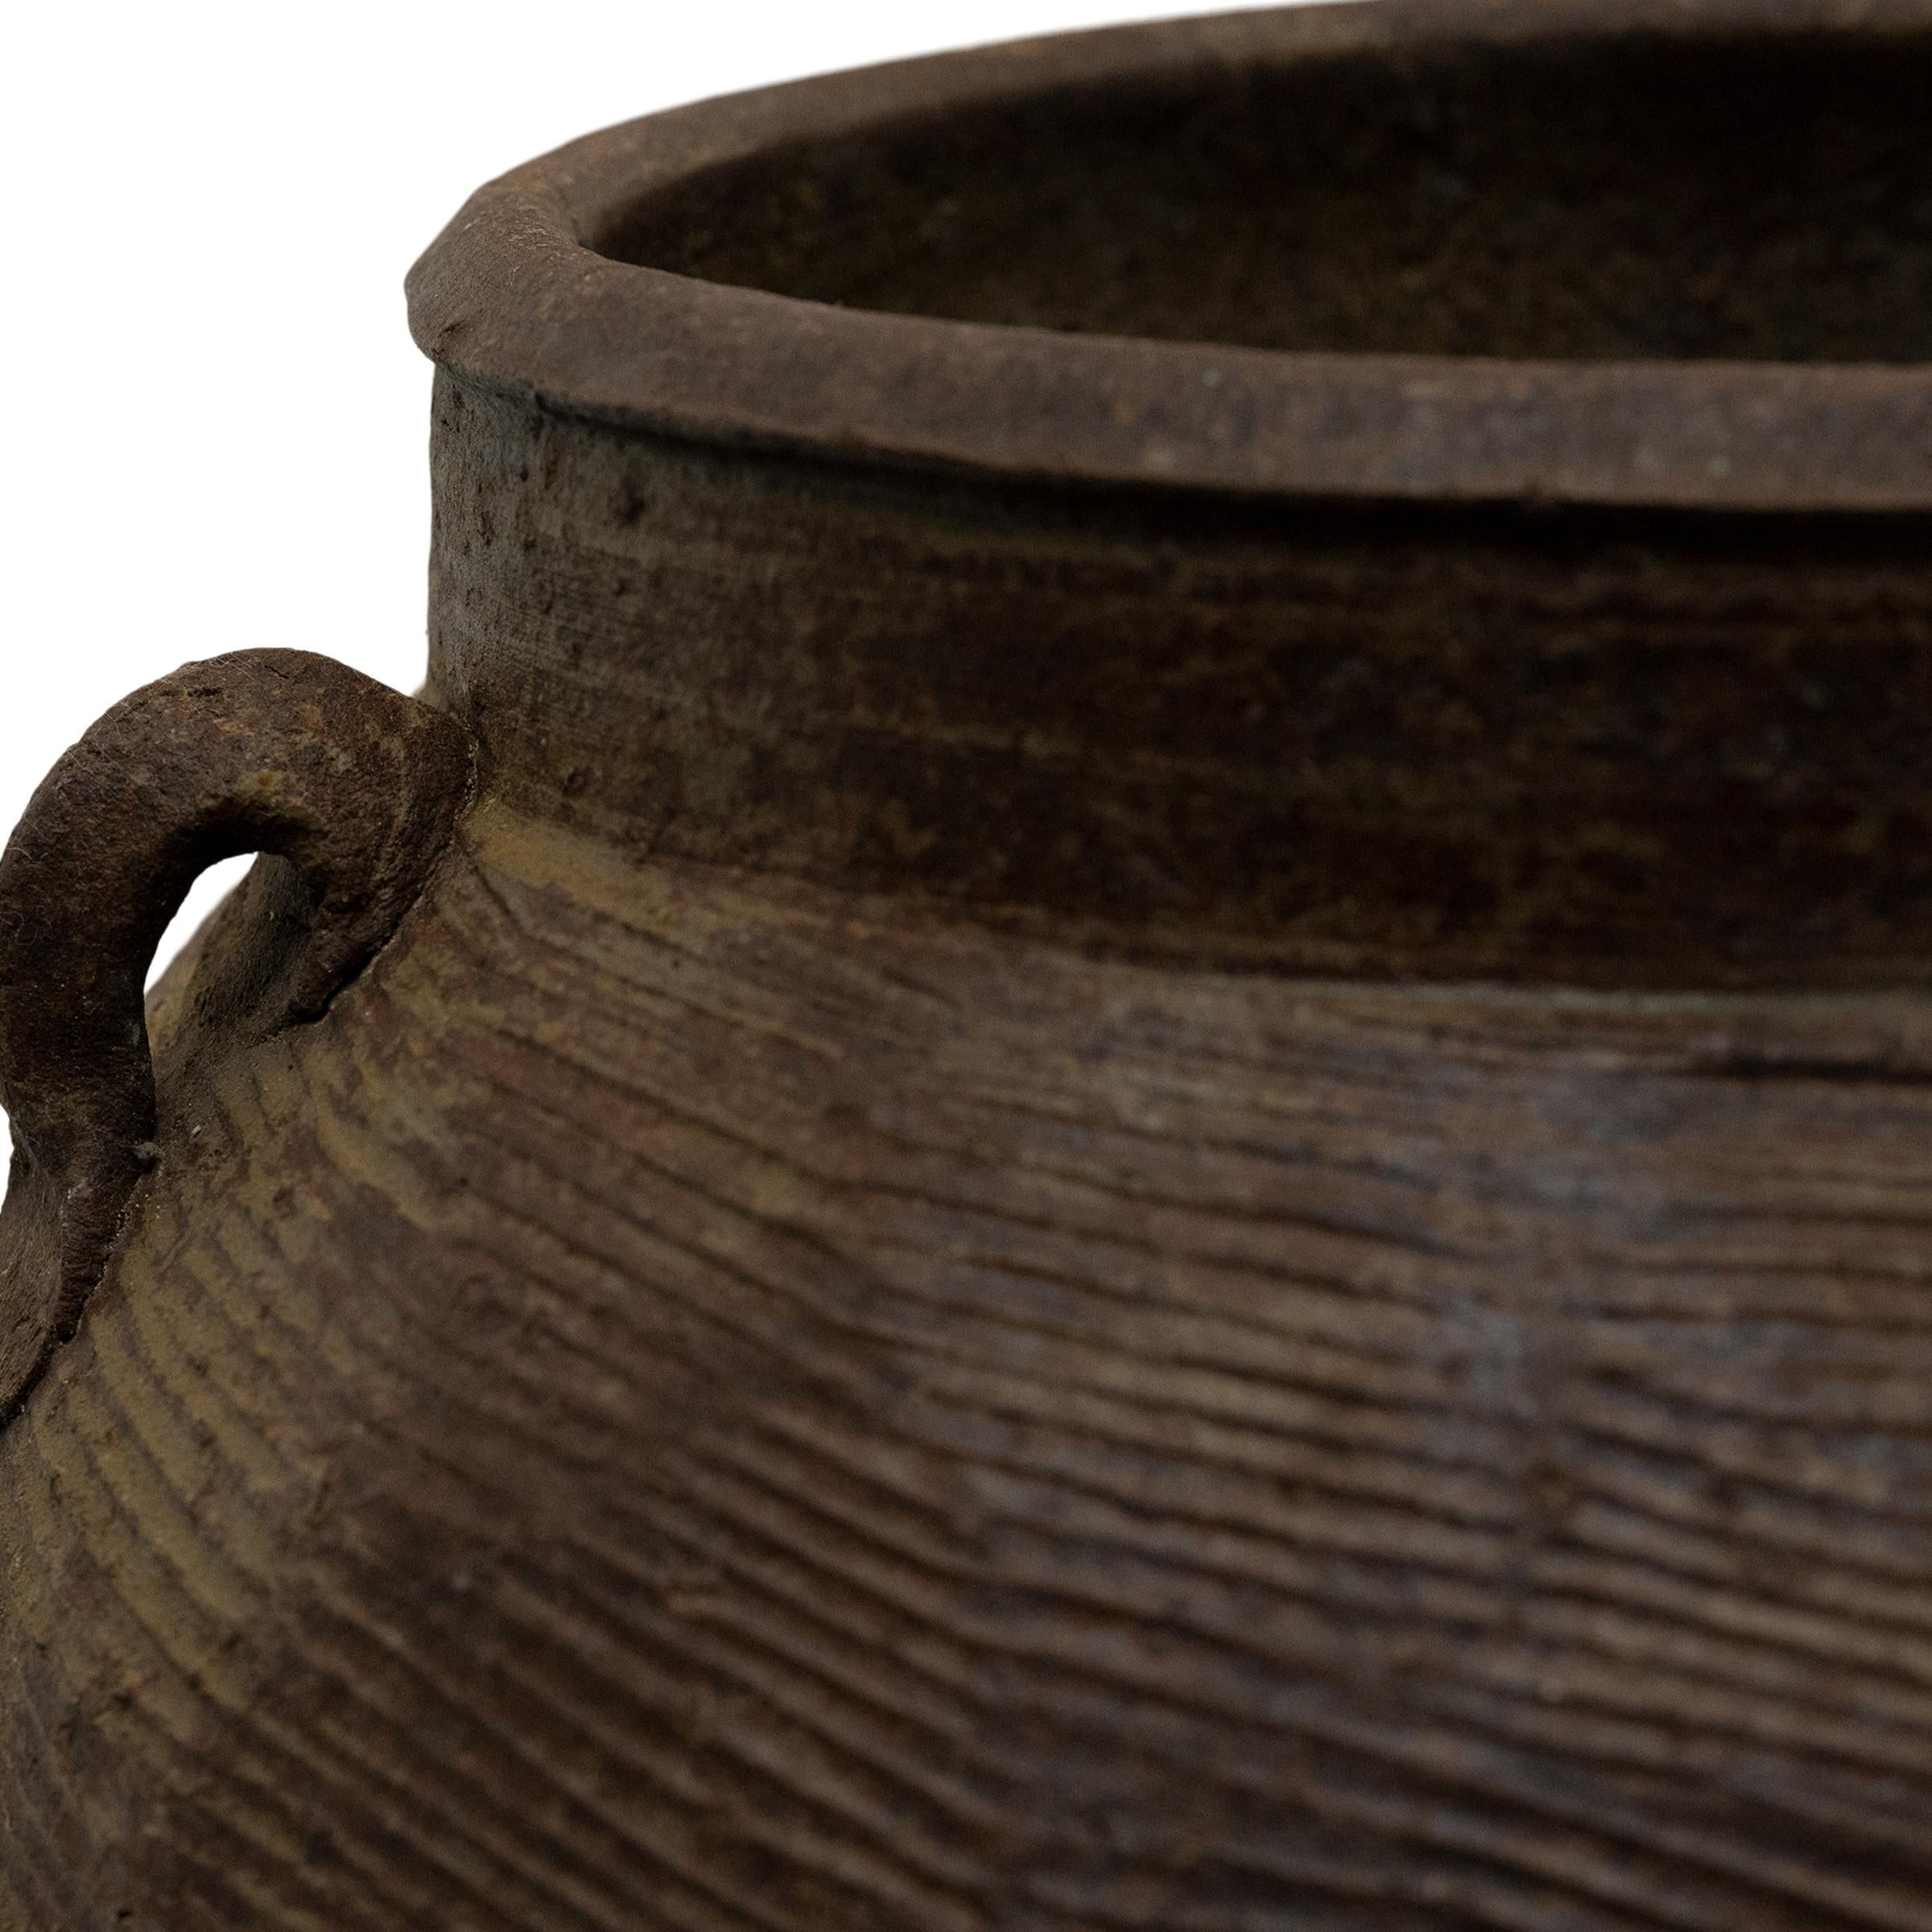 19th Century Chinese Yunnan Lobed Pot, c. 1800